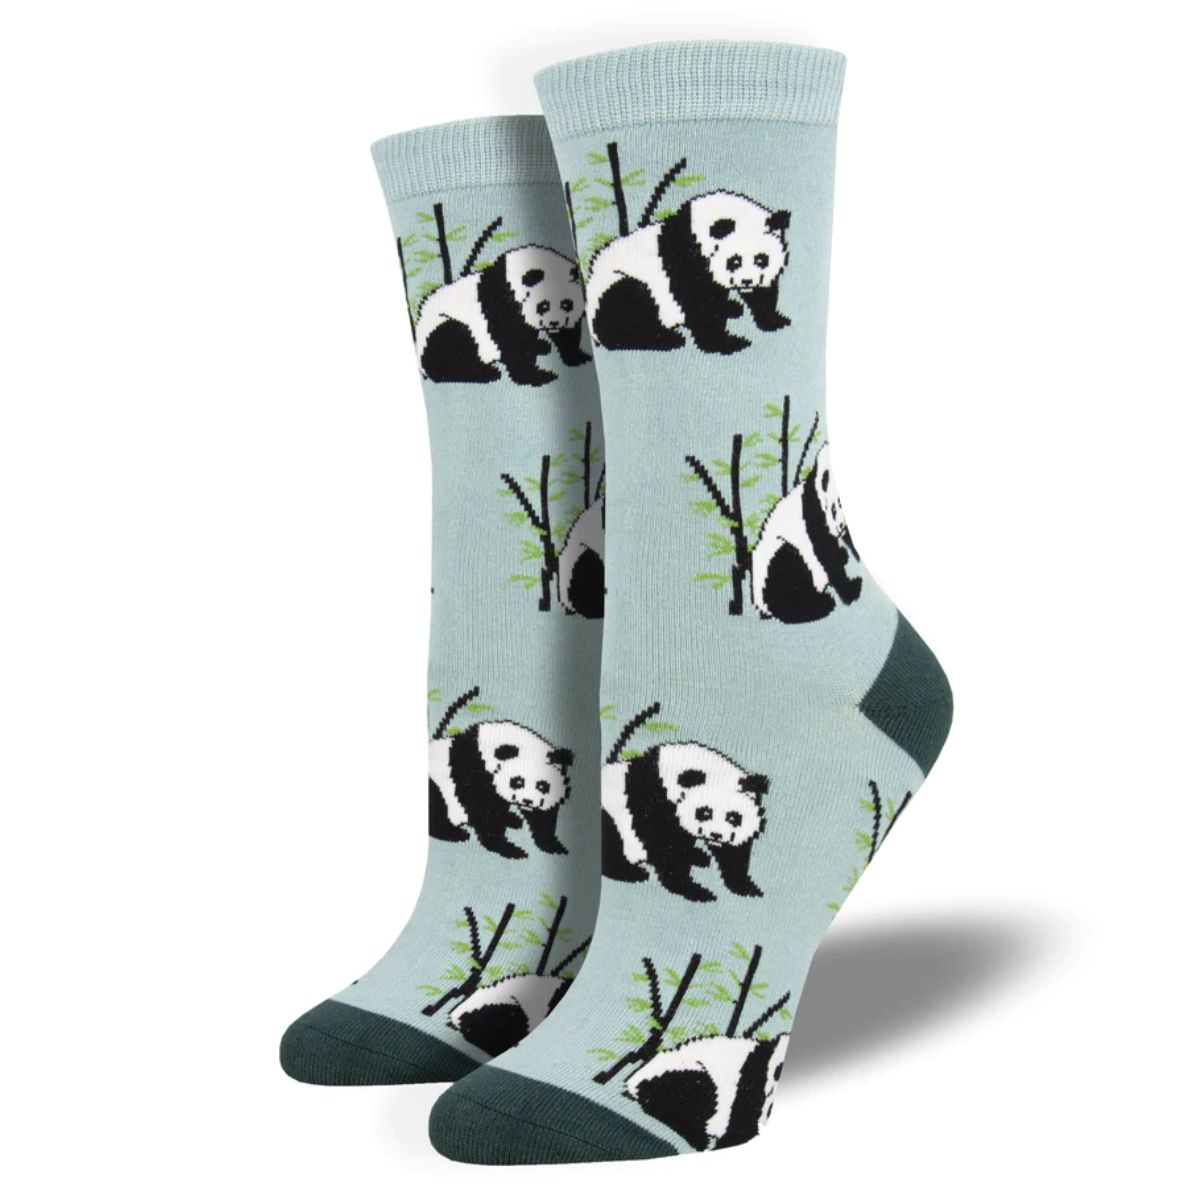 Panda bear socks a pair of light green crew socks with panda and bamboo plant print